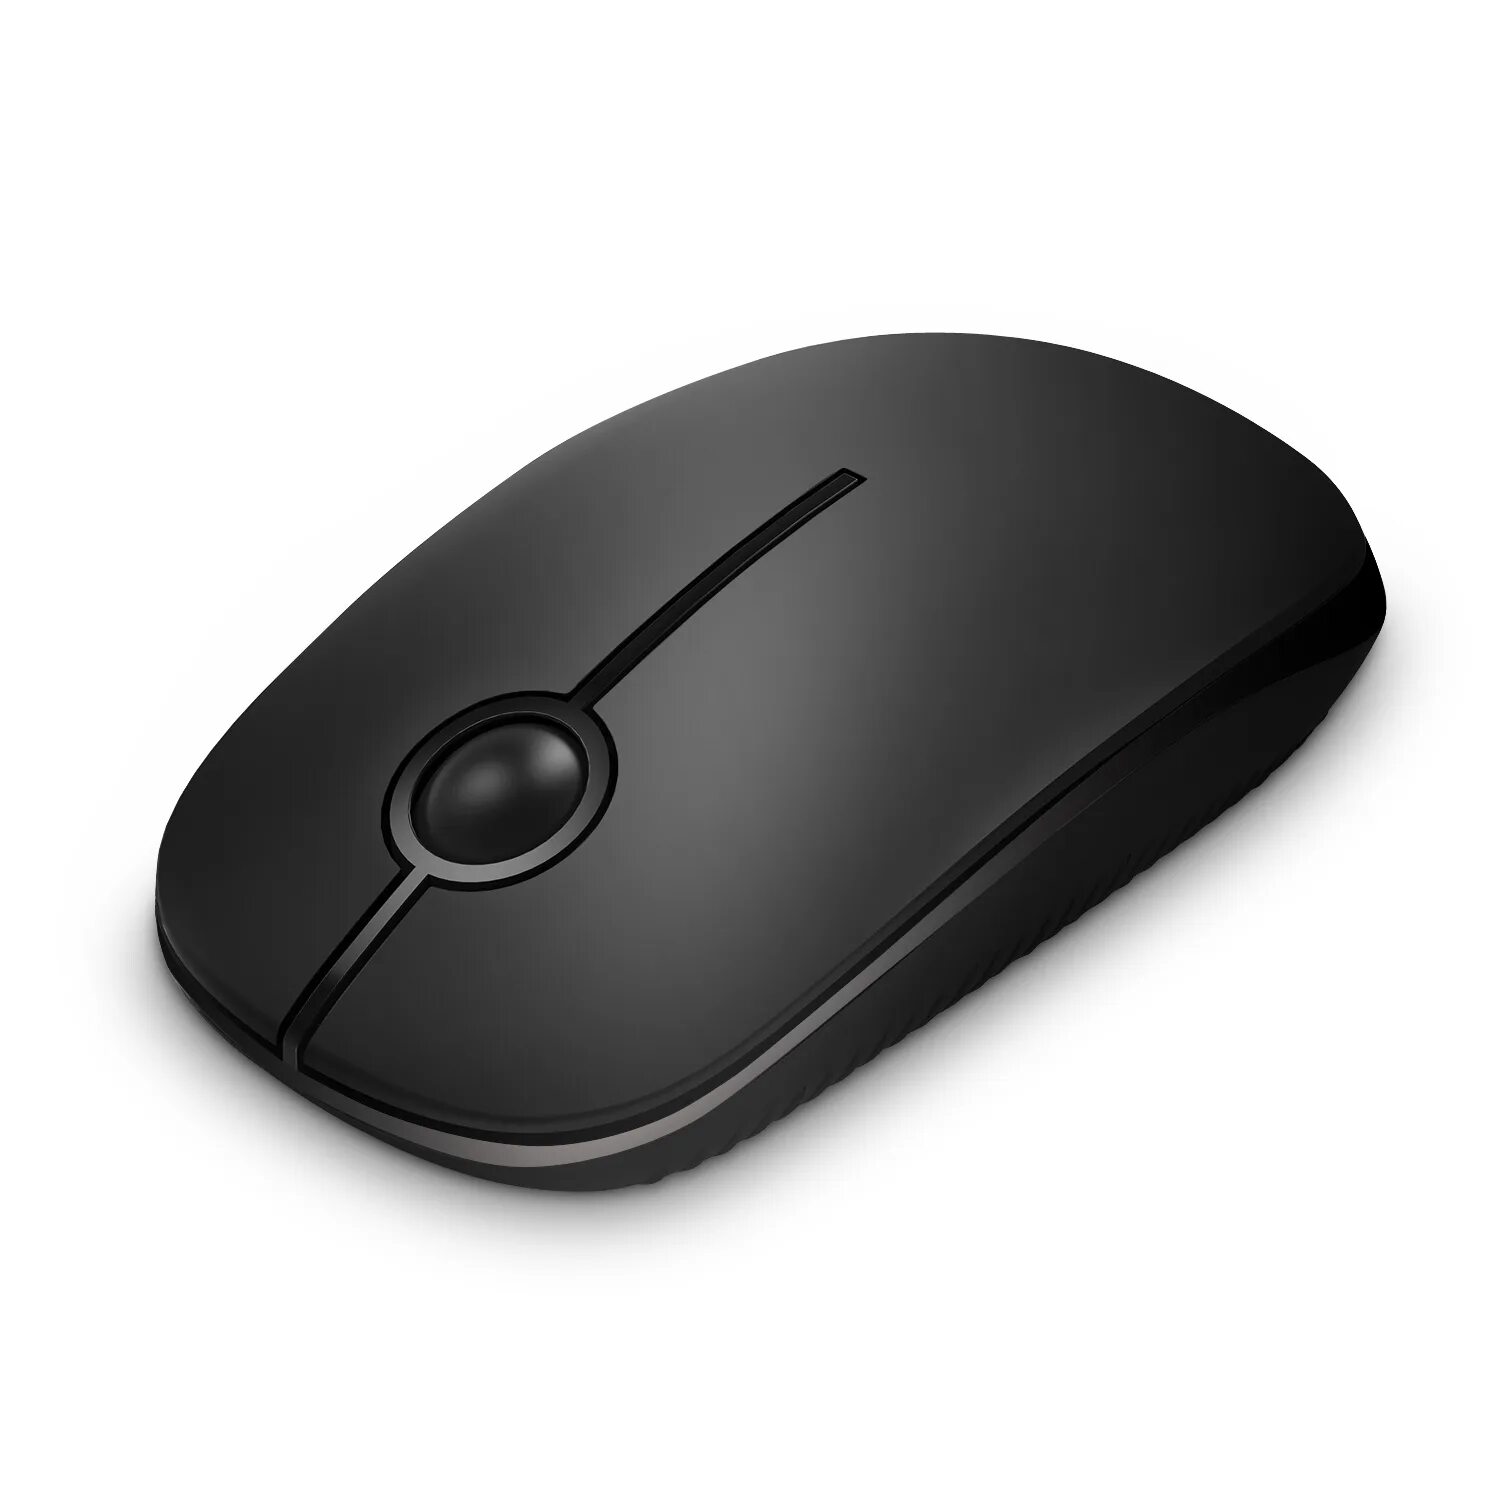 Лучшая мышь для ноутбука. 2.4G Wireless Mouse. Jelly Comb 2.4g Slim Wireless Mouse. Jelly Comb Slim Wireless Mouse. 2.4G Wireless Mouse USB.